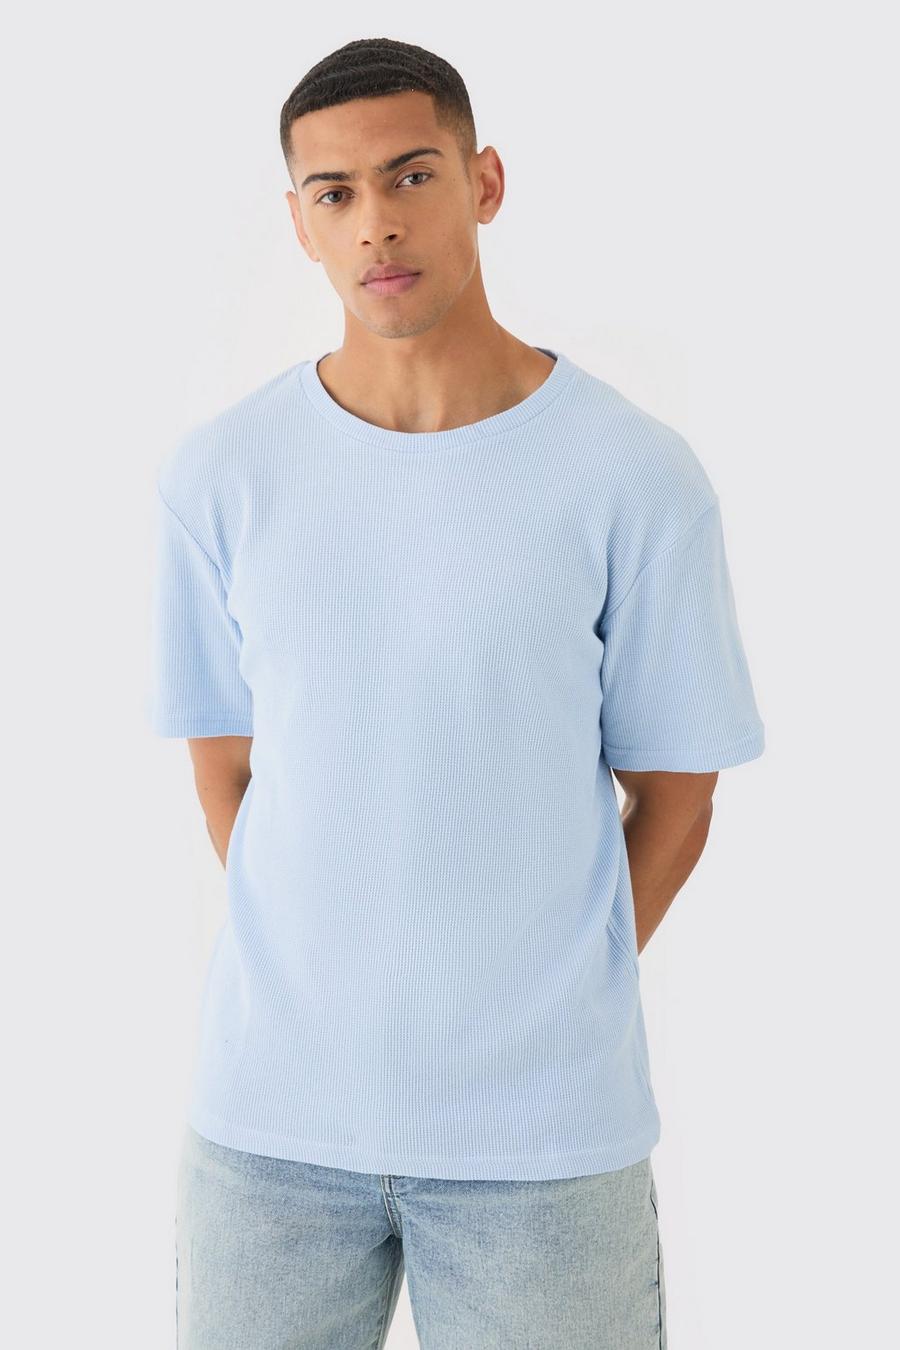 T-Shirt in Waffeloptik, Light blue